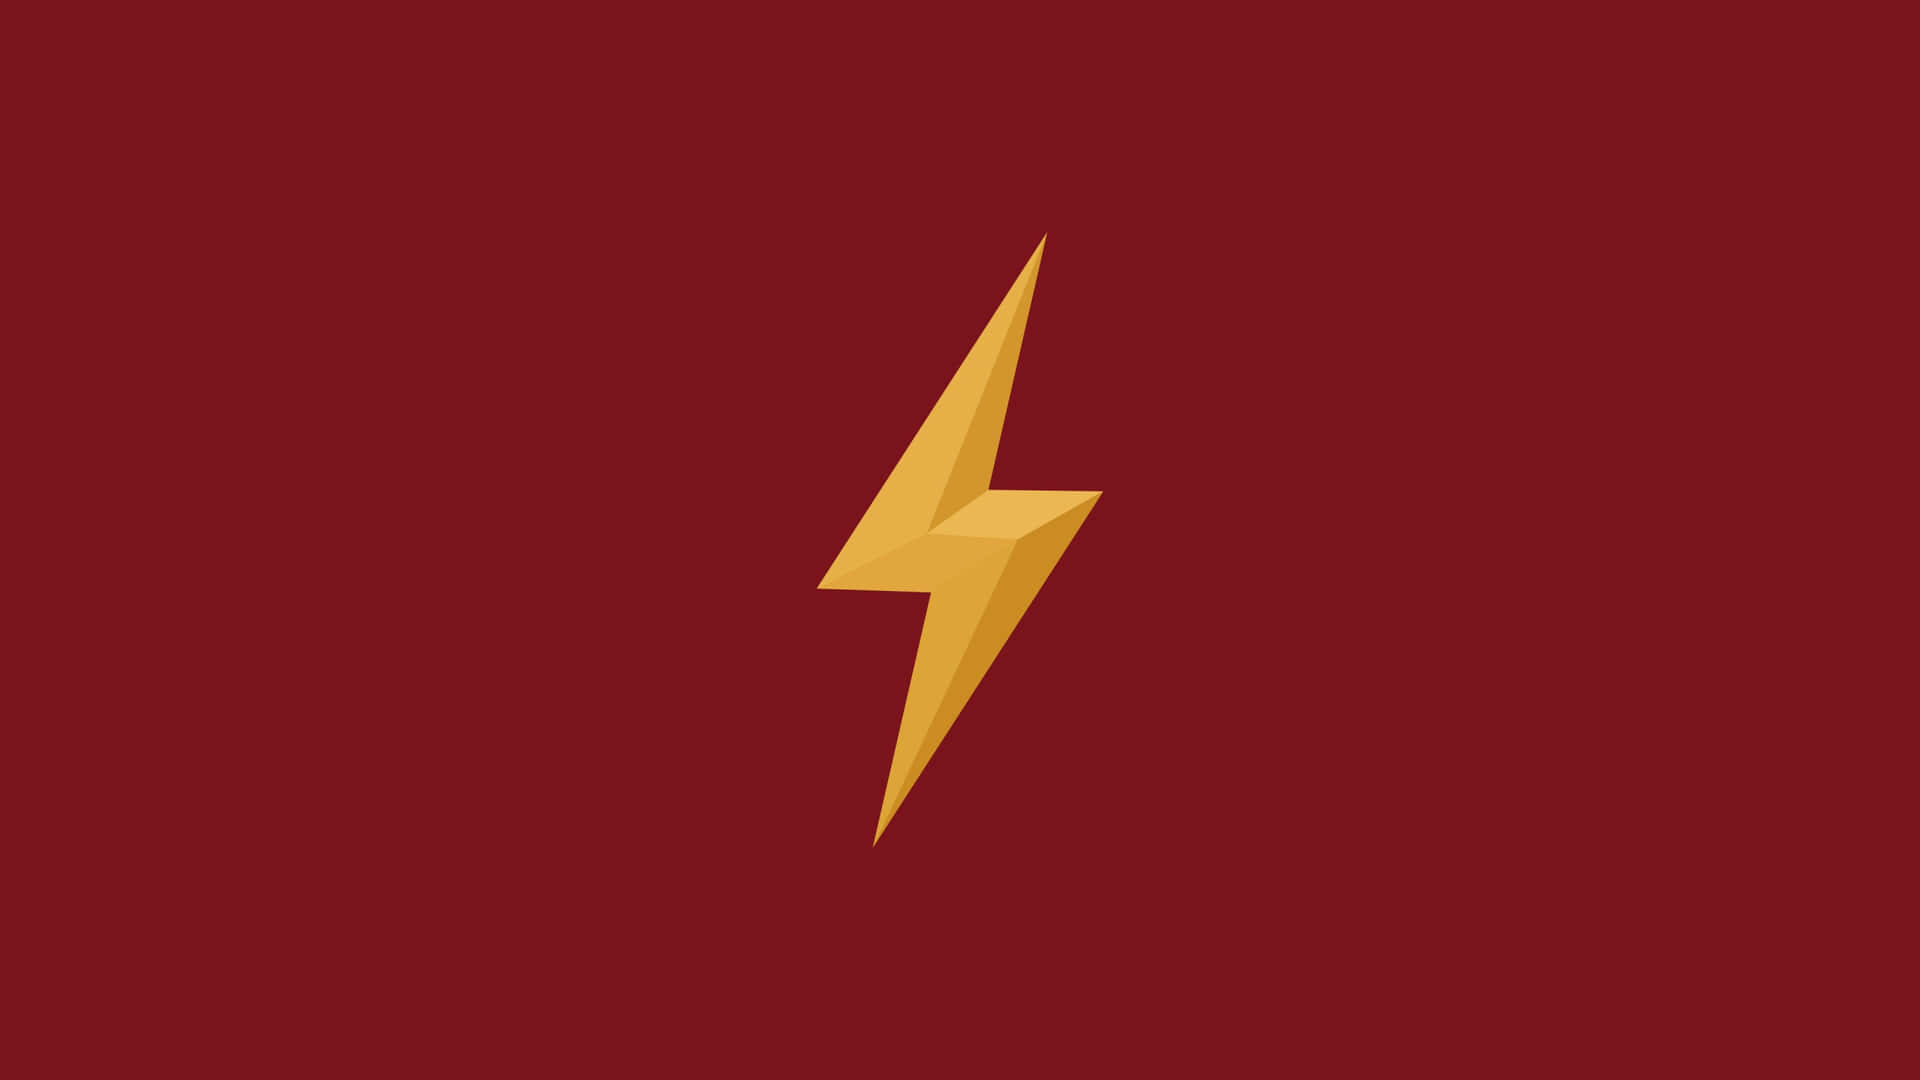 The Flash Logo Symbolon Red Background.jpg Wallpaper